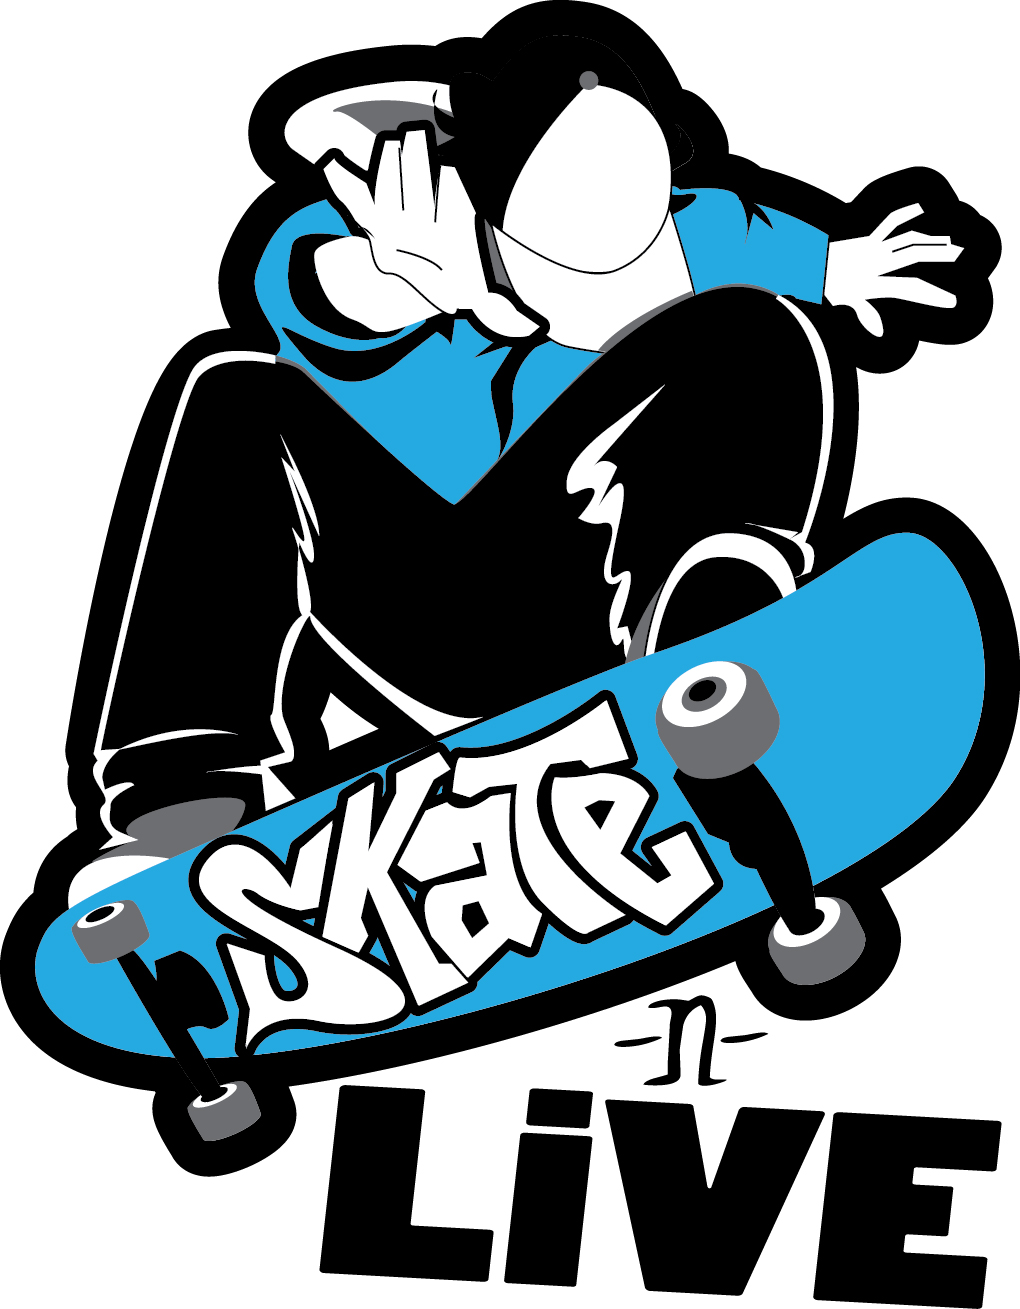 download skate ea com